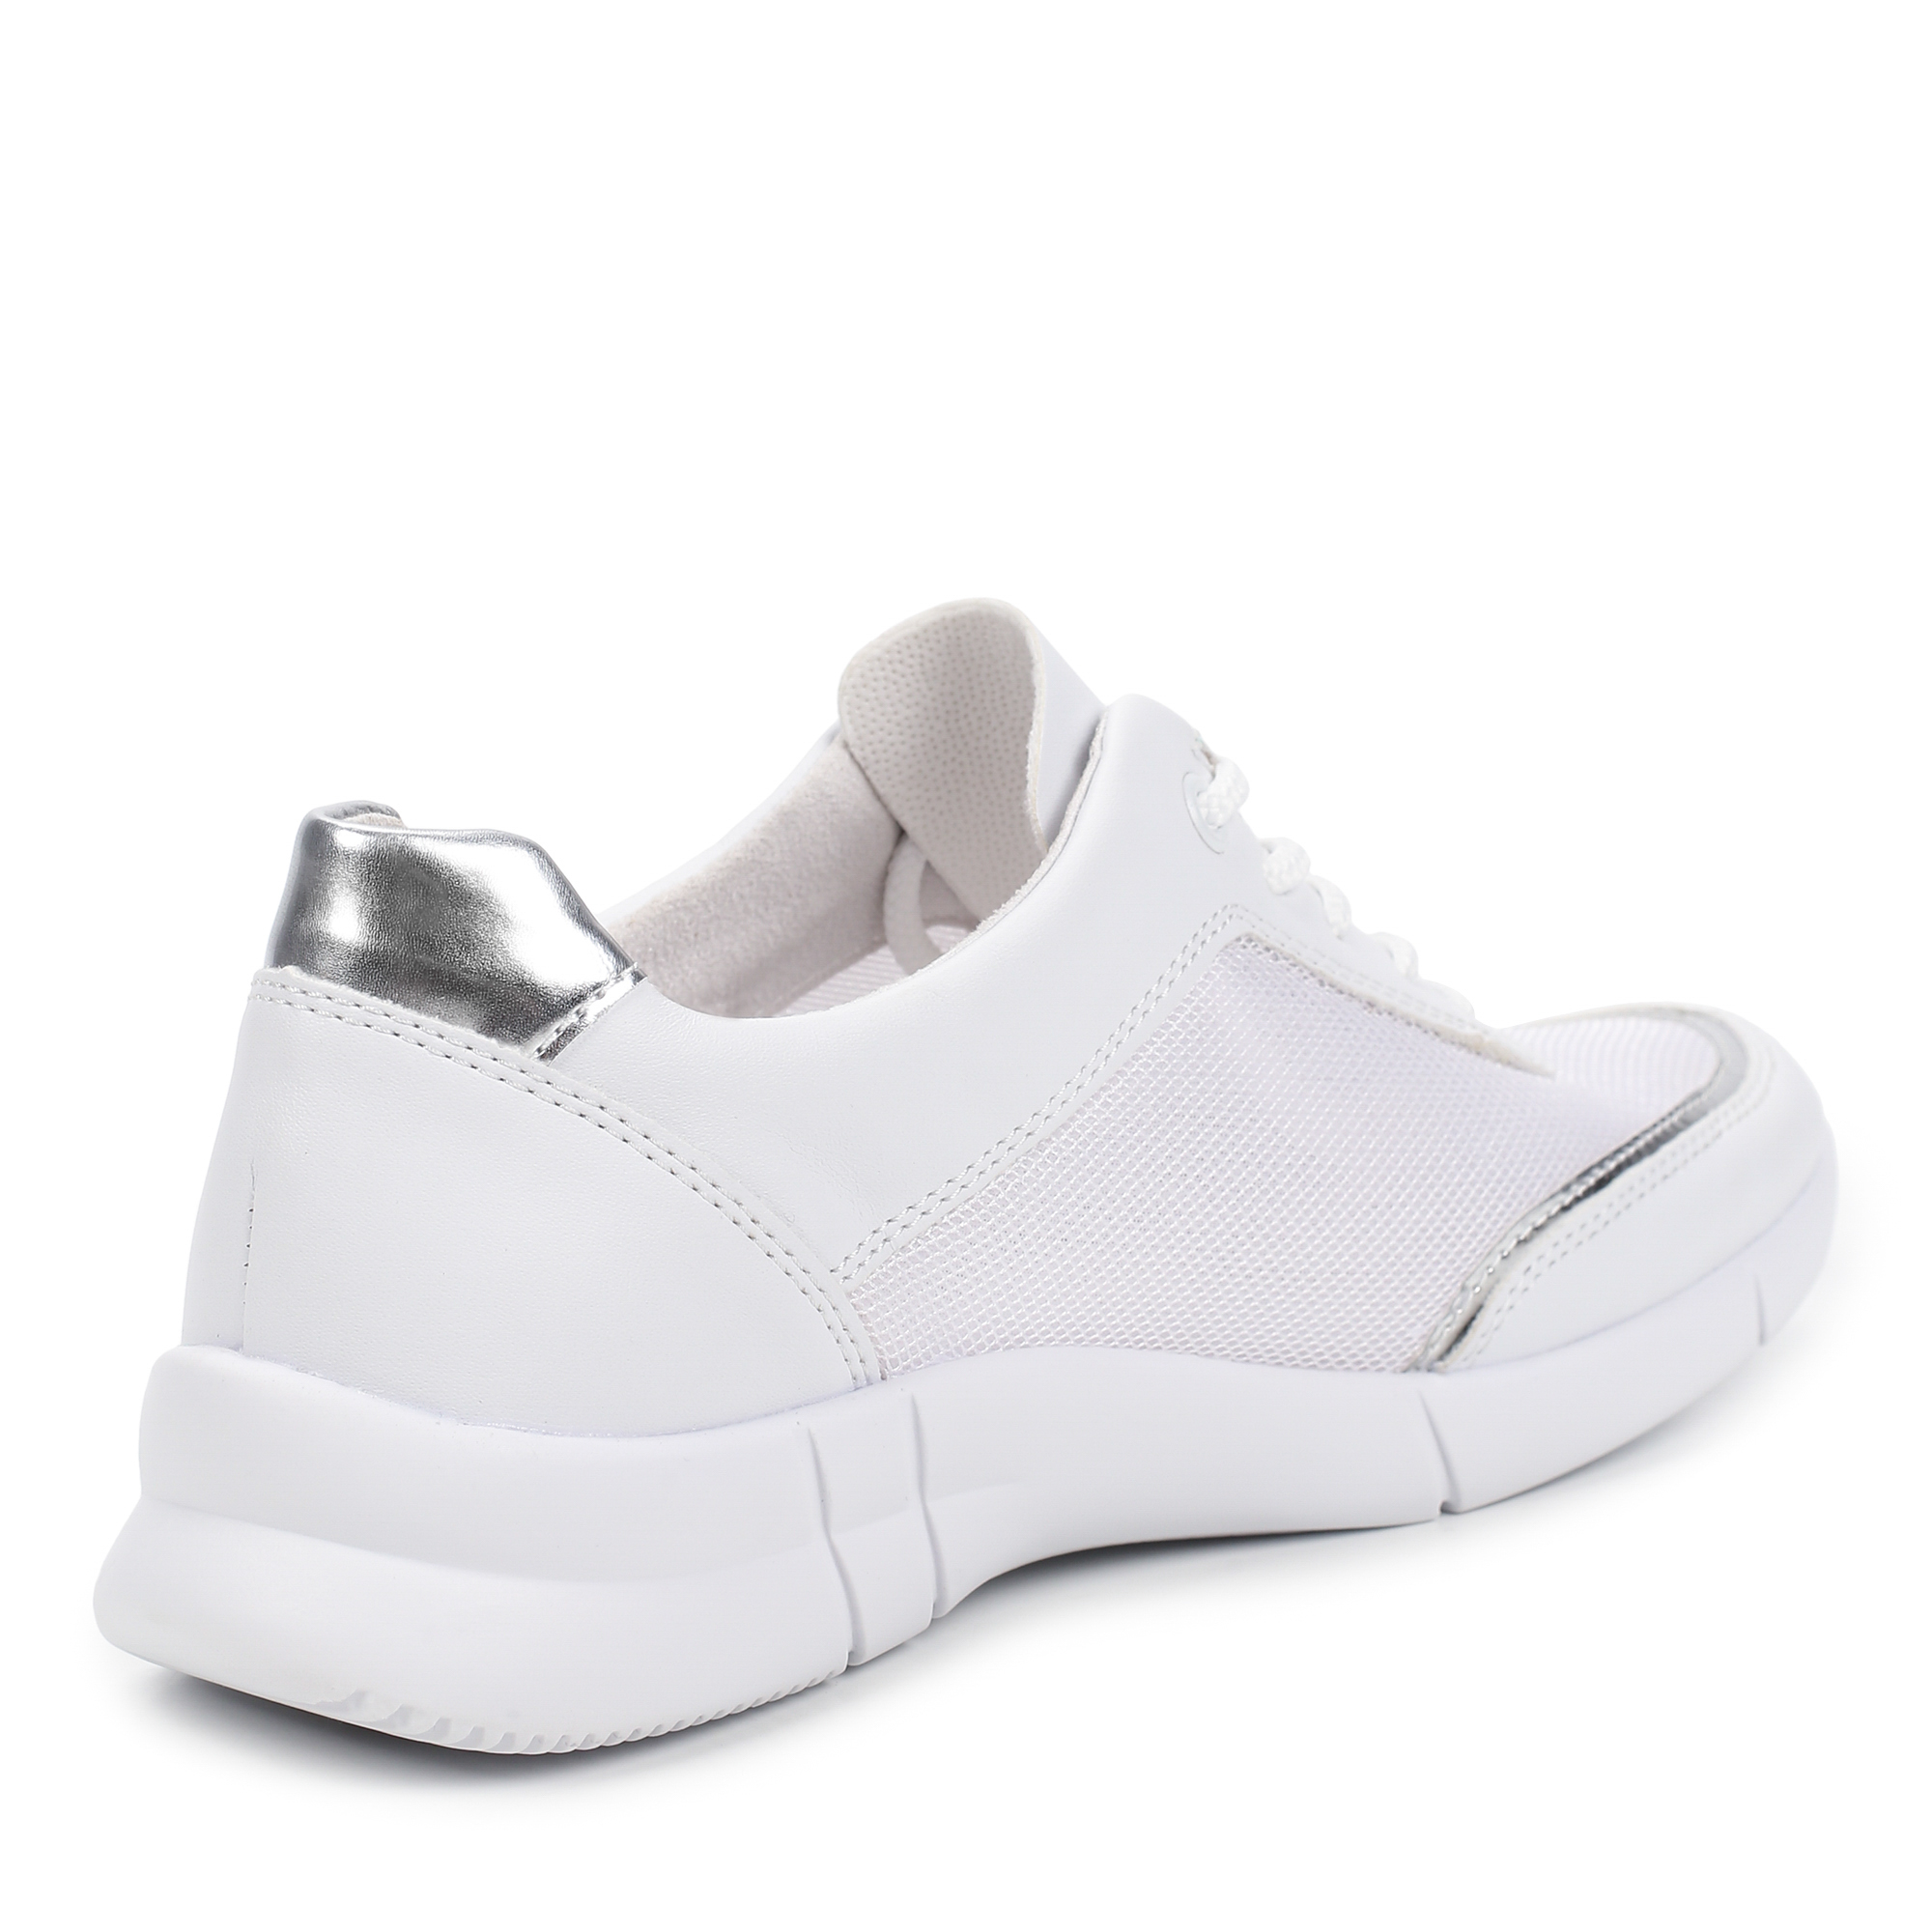 Туфли Rieker N2122-80, цвет белый, размер 41 - фото 3